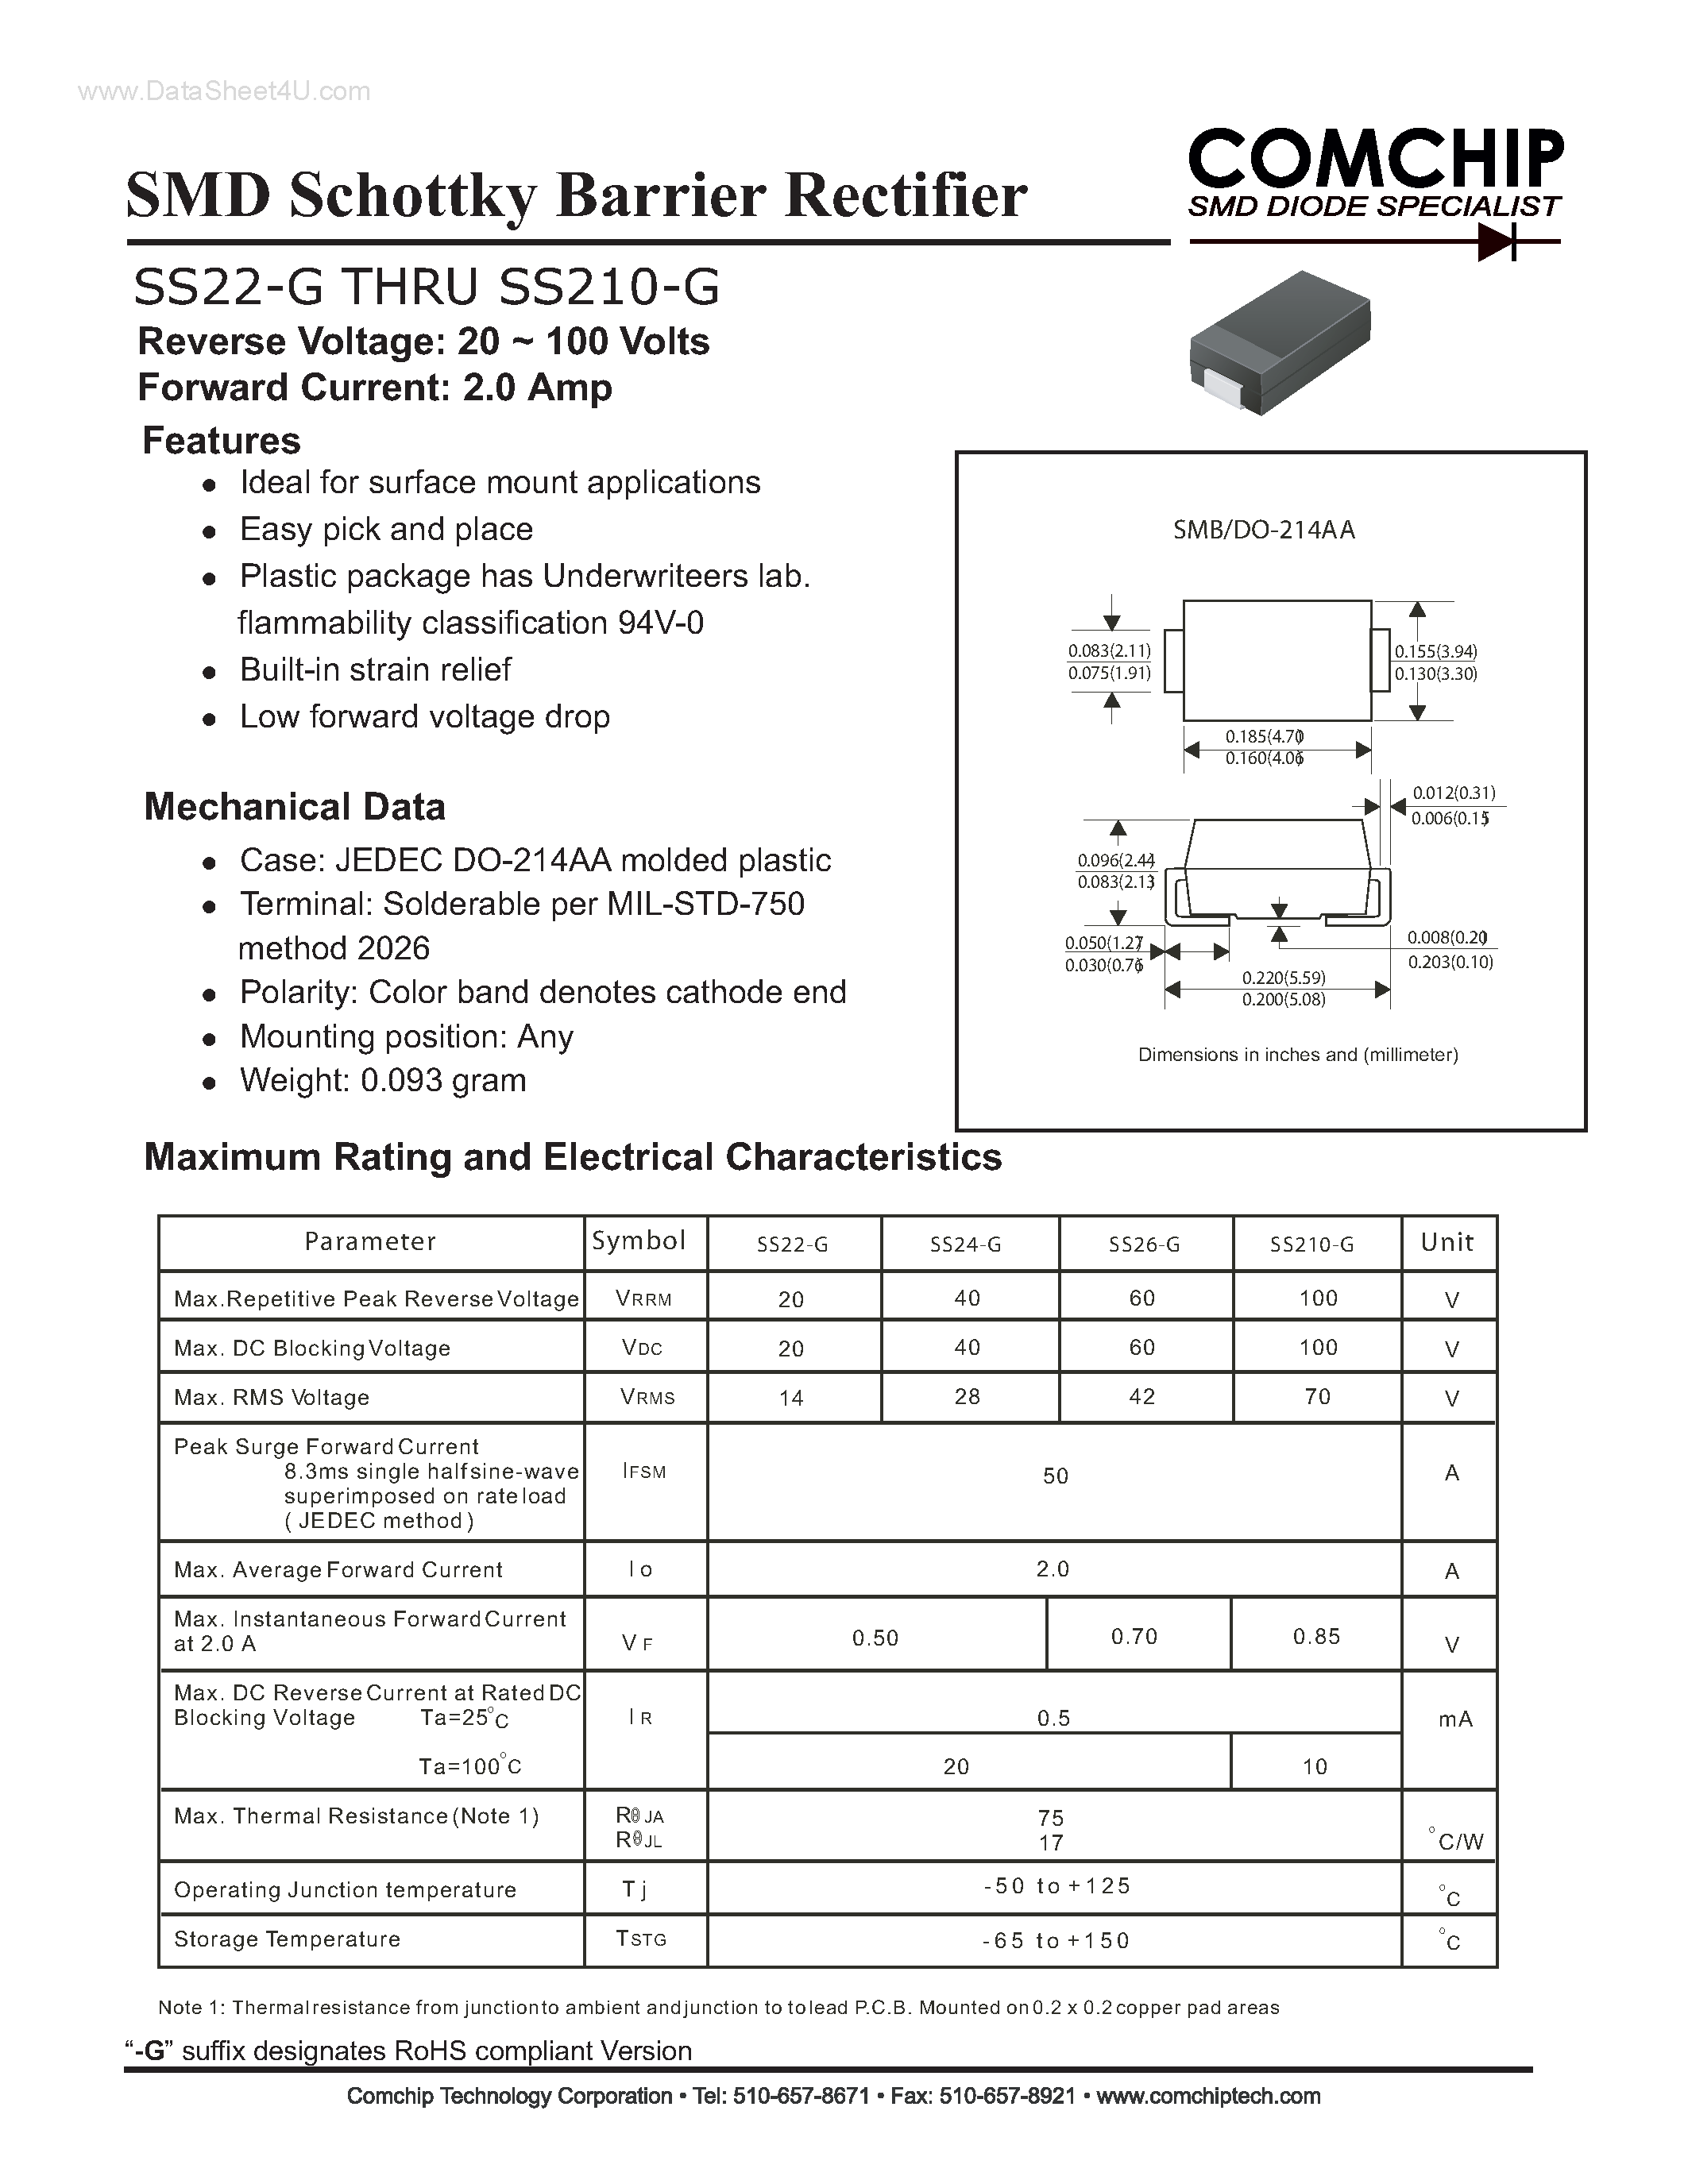 Datasheet SS210-G - (SS22-G - SS210-G) SMD Schottky Barrier Rectifier page 1